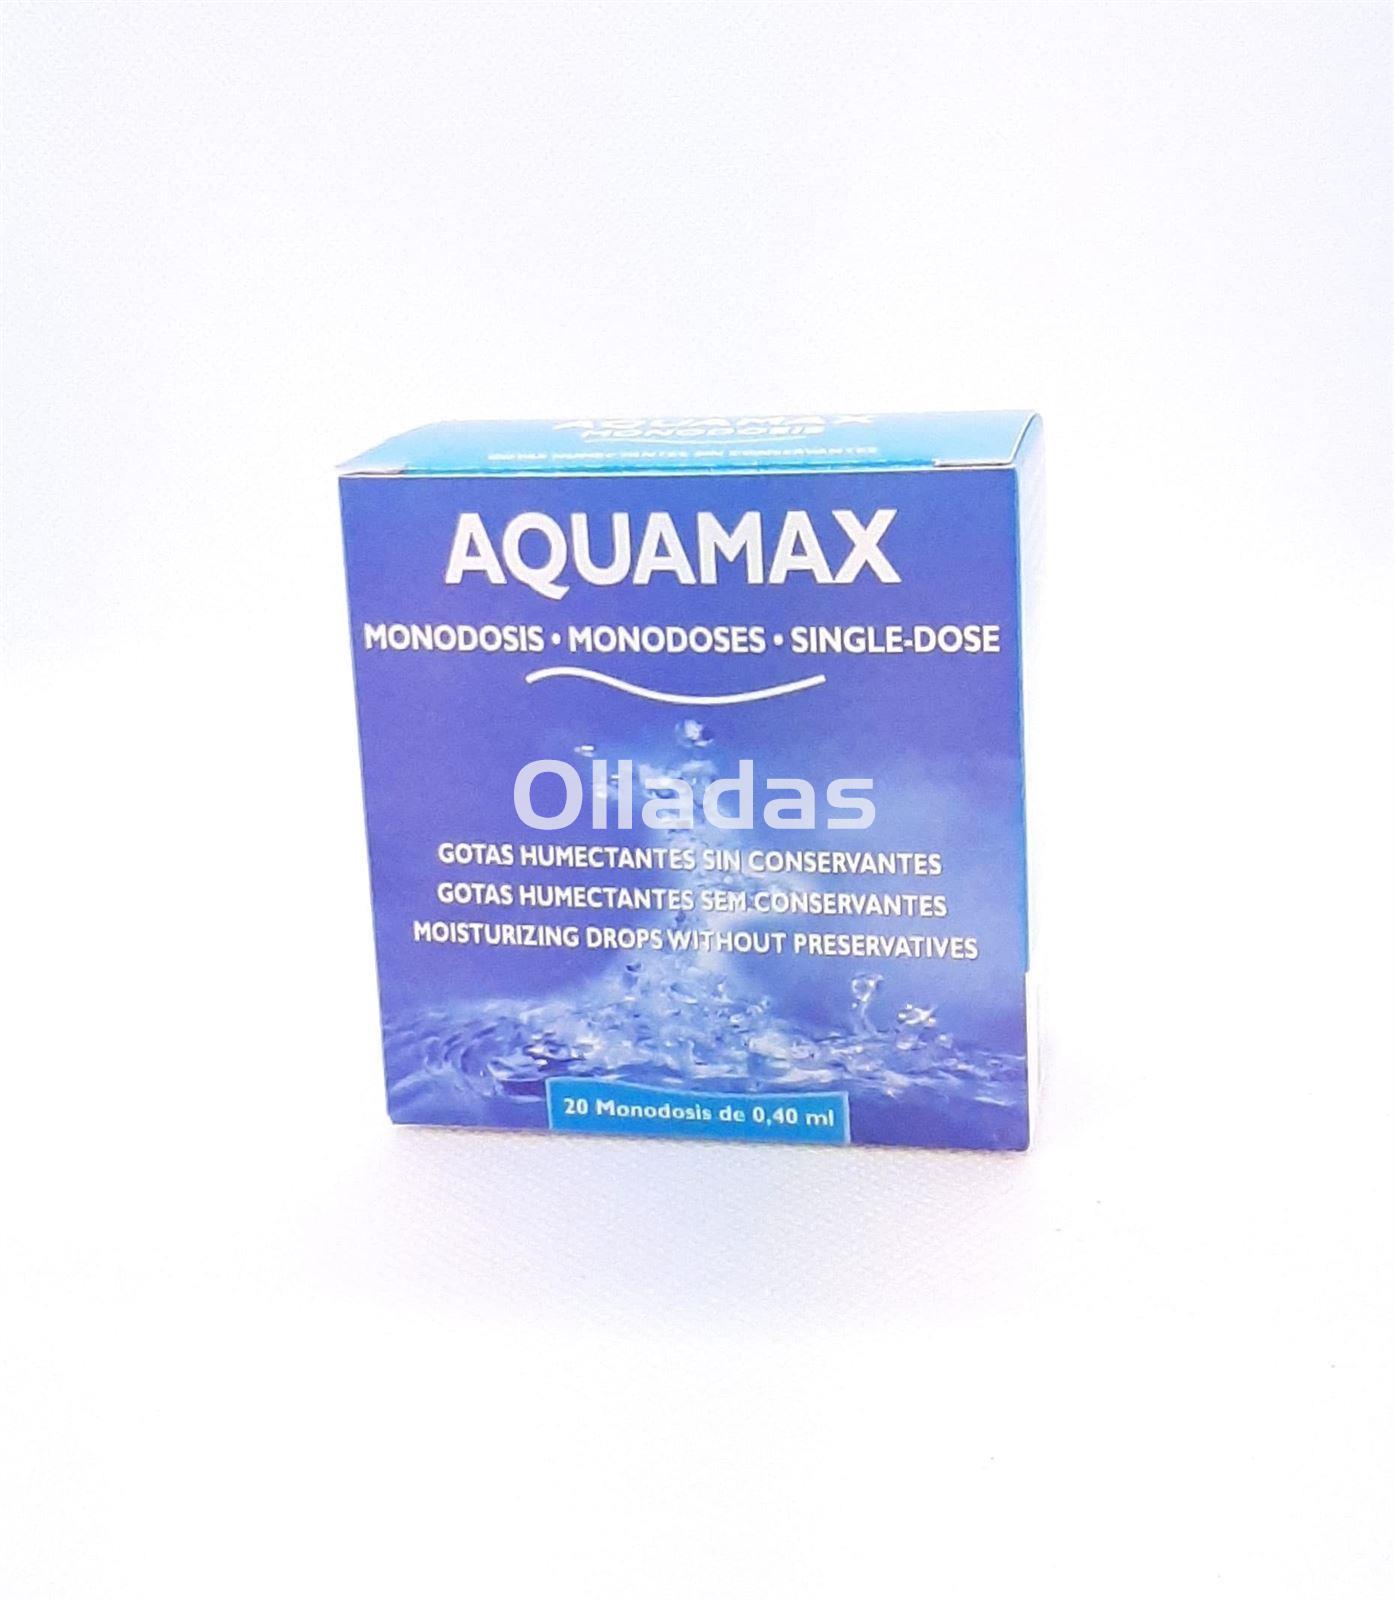 Aquamax (20 monodosis de 0,4mL). - Imagen 1